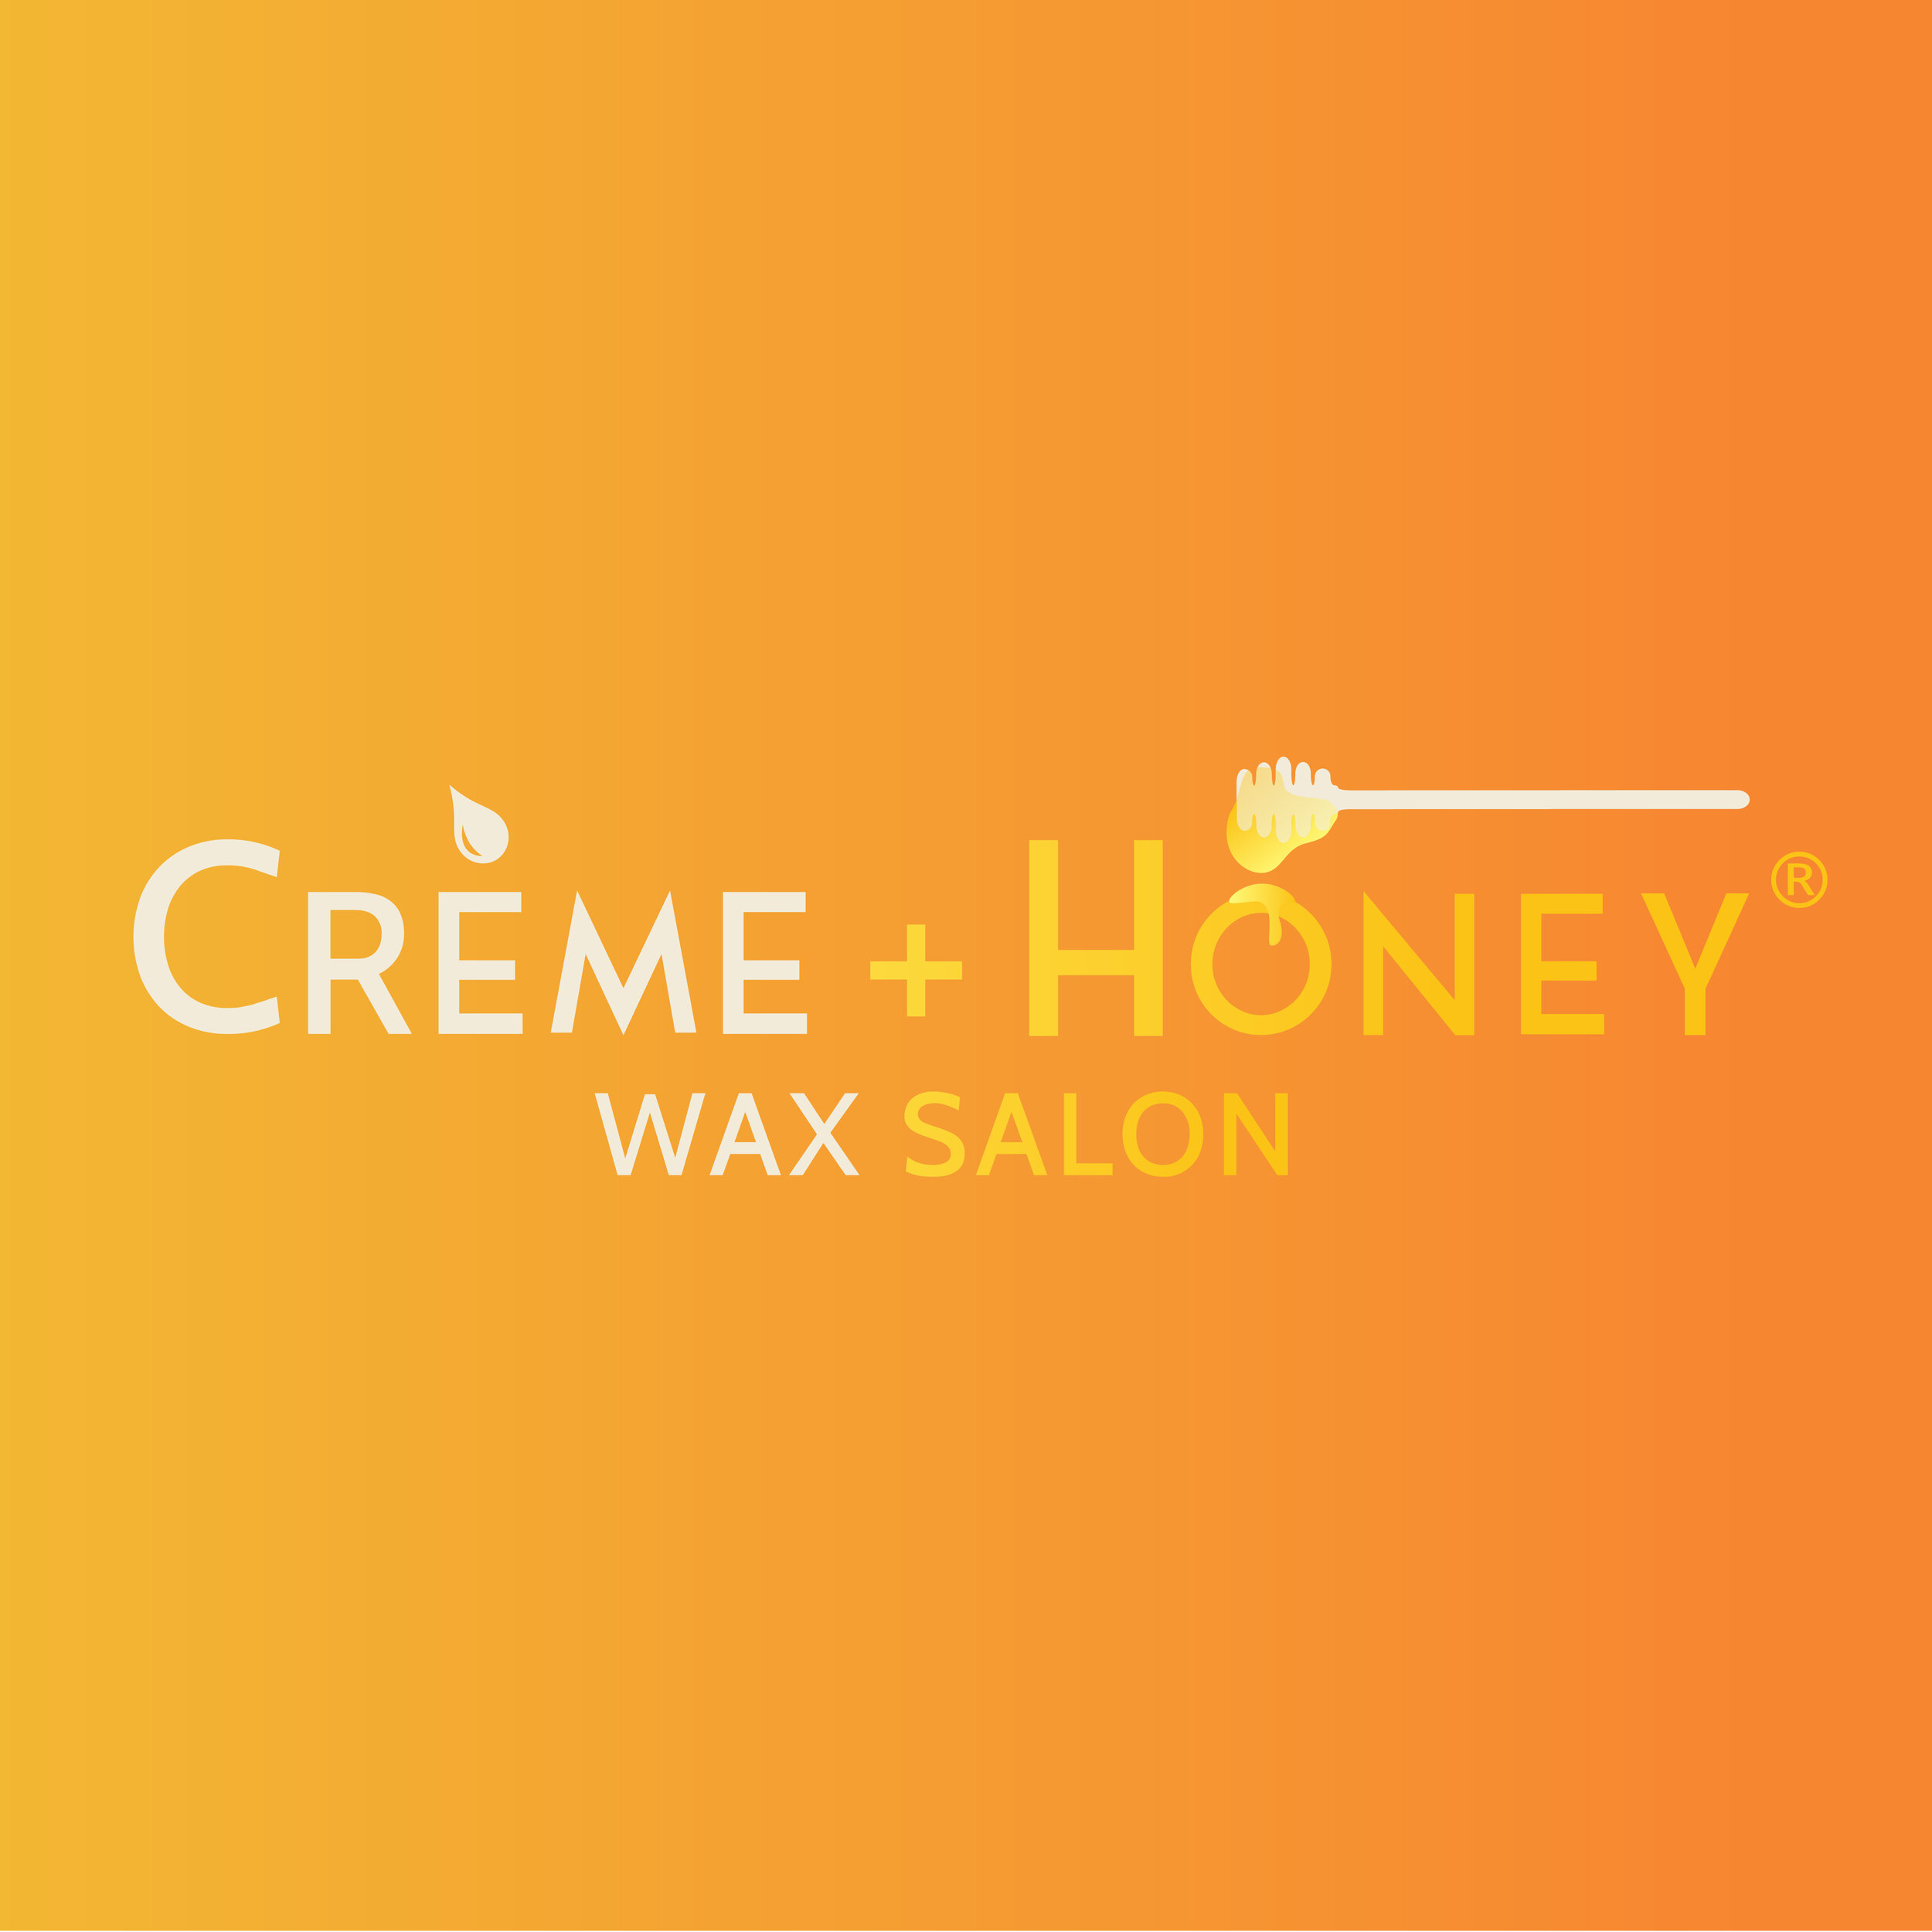 CRÈME + HONEY WAX SALON